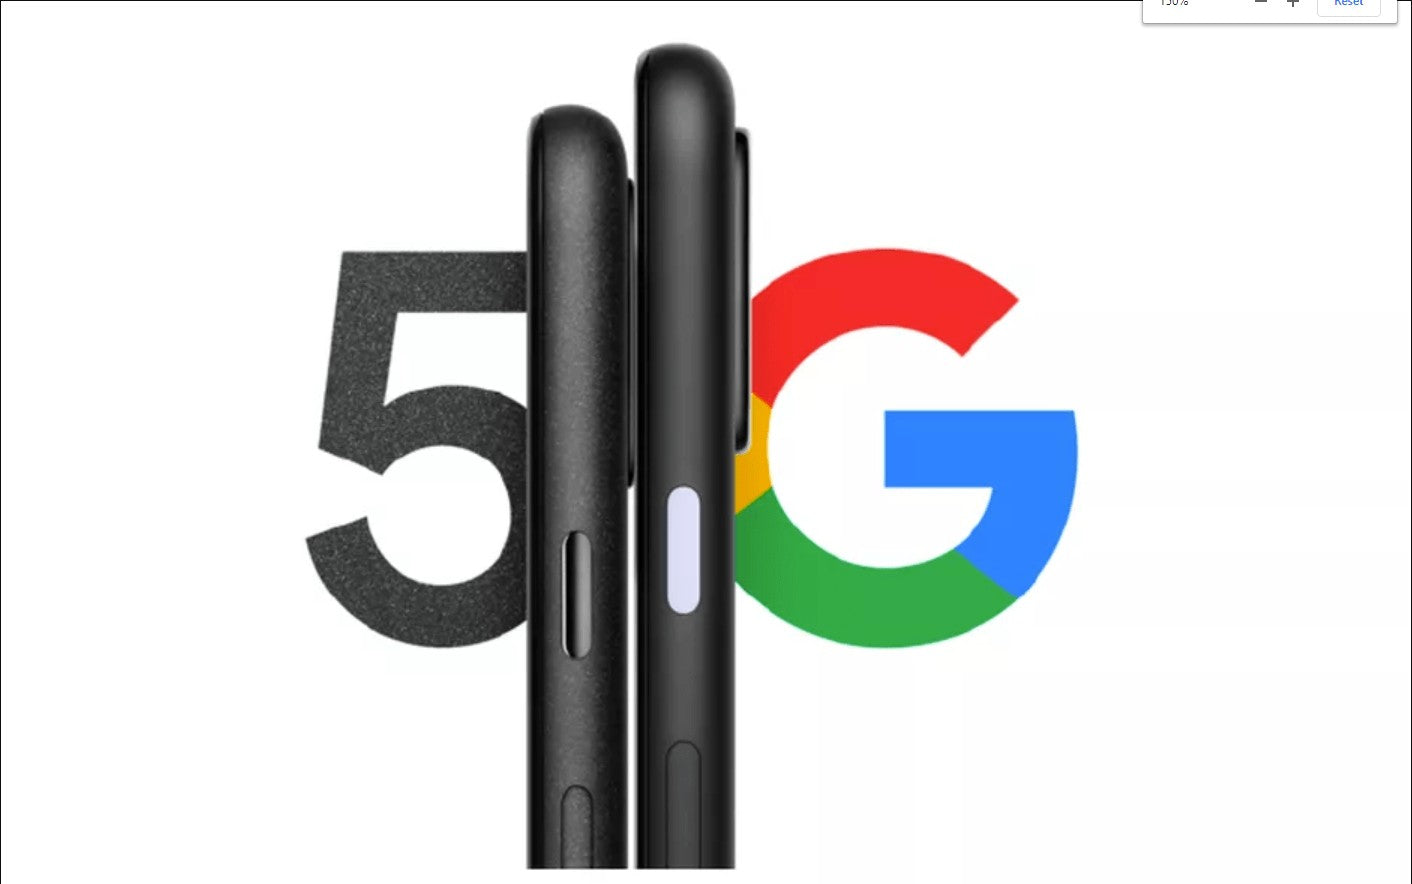 Google Pixel 5: Will launch on September 30